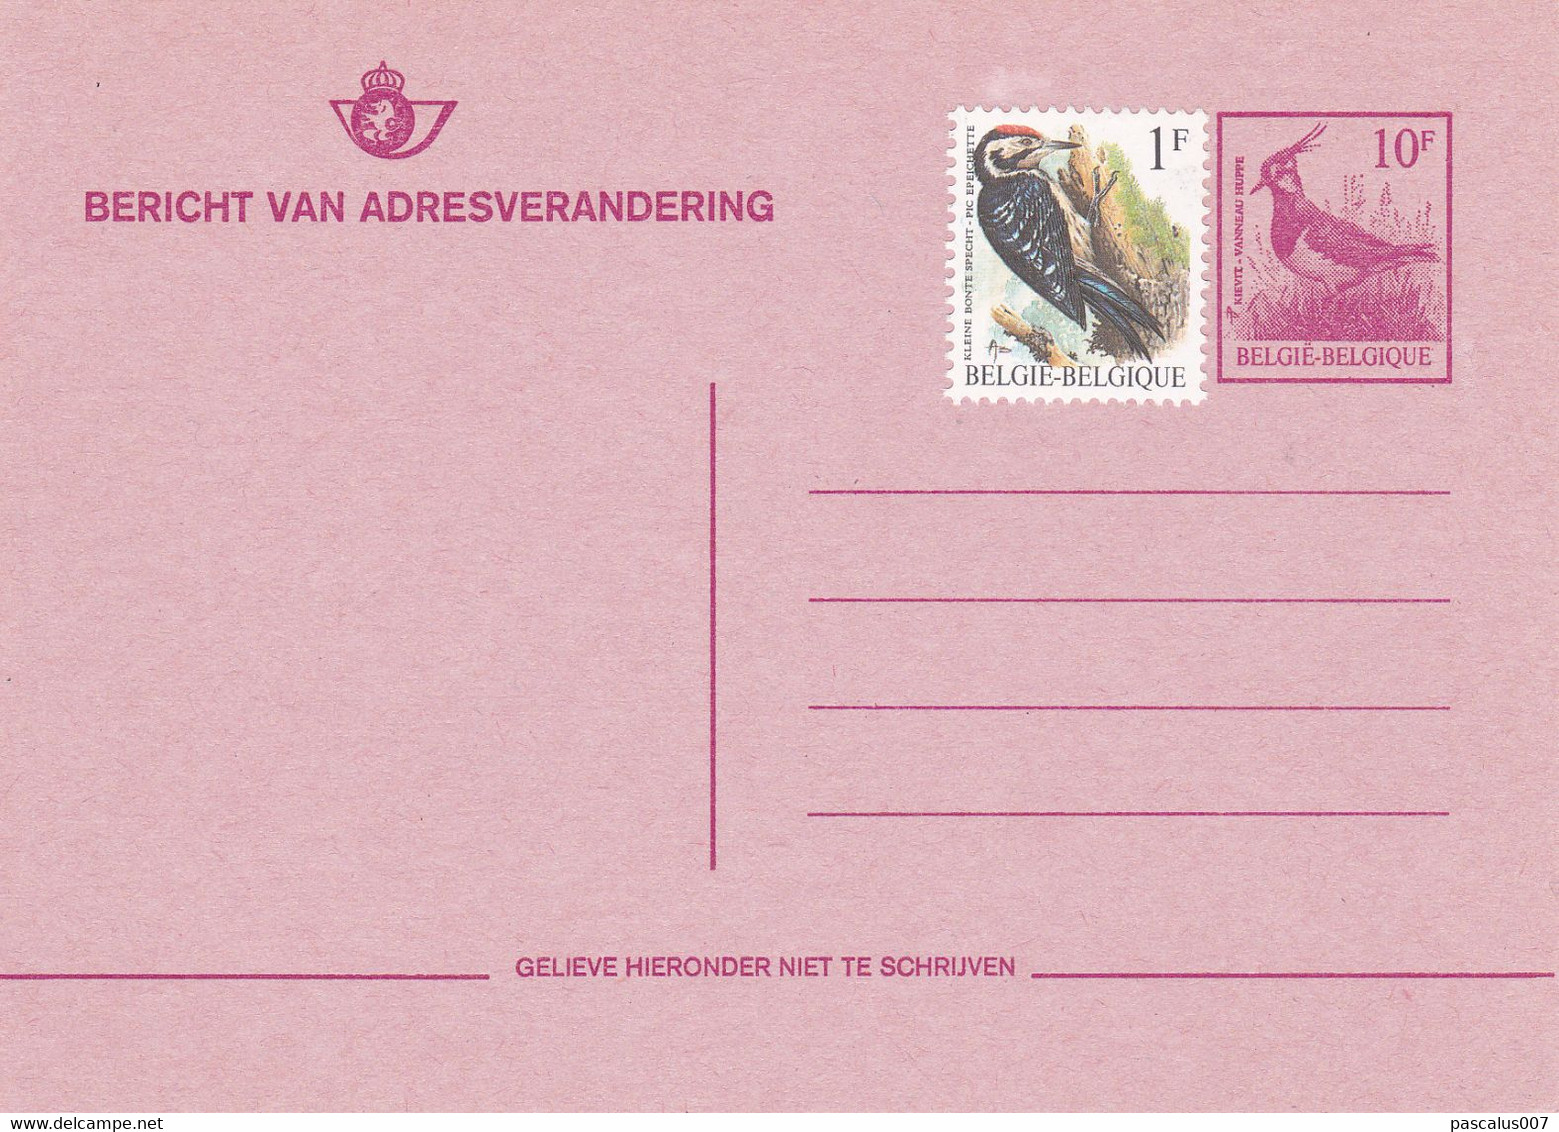 B01-396 Belgique CEP 27 N - Carte Entier Postal  1984 - COB Vierge - Série Oiseau - Avis De Changement Adresse - Adressenänderungen